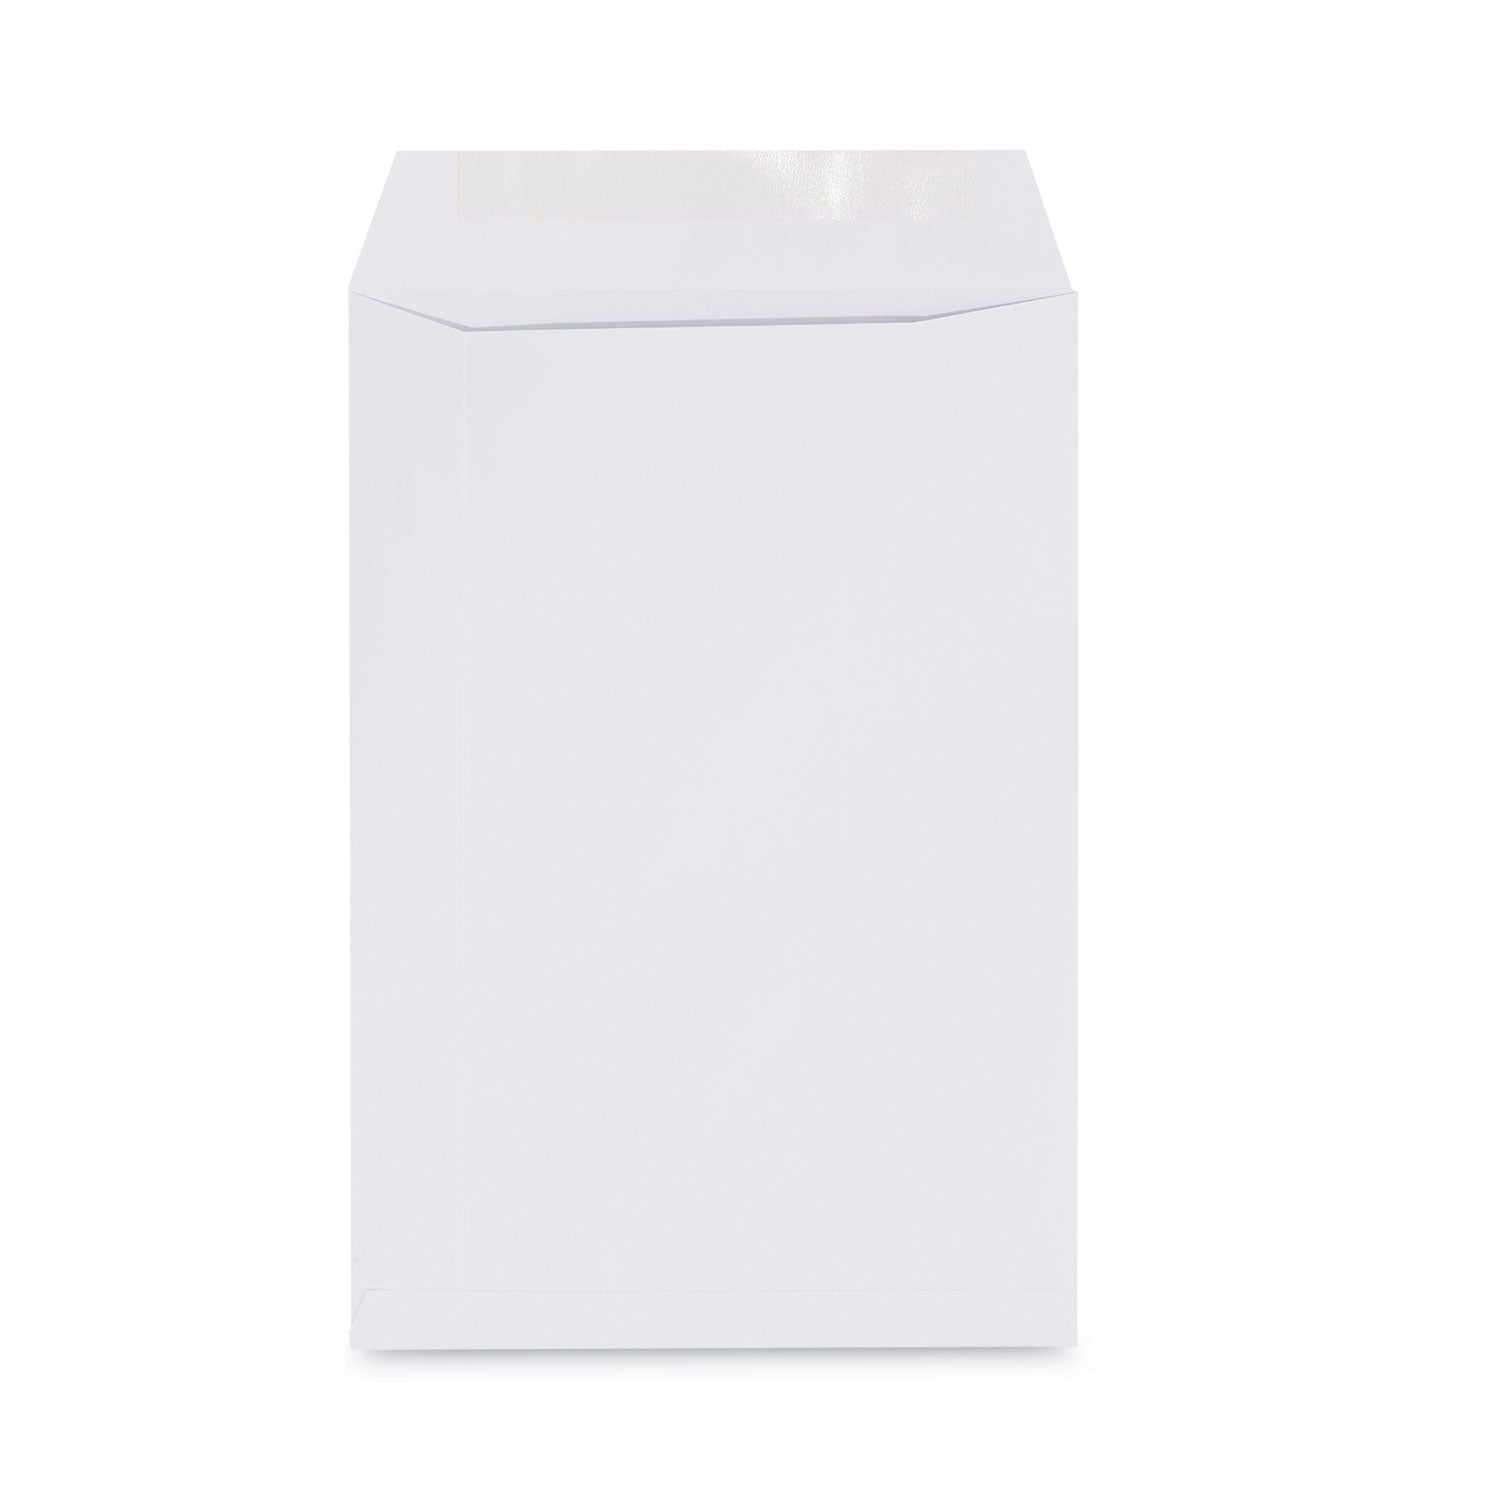 Catalog Envelope, 24 lb Bond Weight Paper, #1 3/4, Square Flap, Gummed Closure, 6.5 x 9.5, White, 500/Box - 